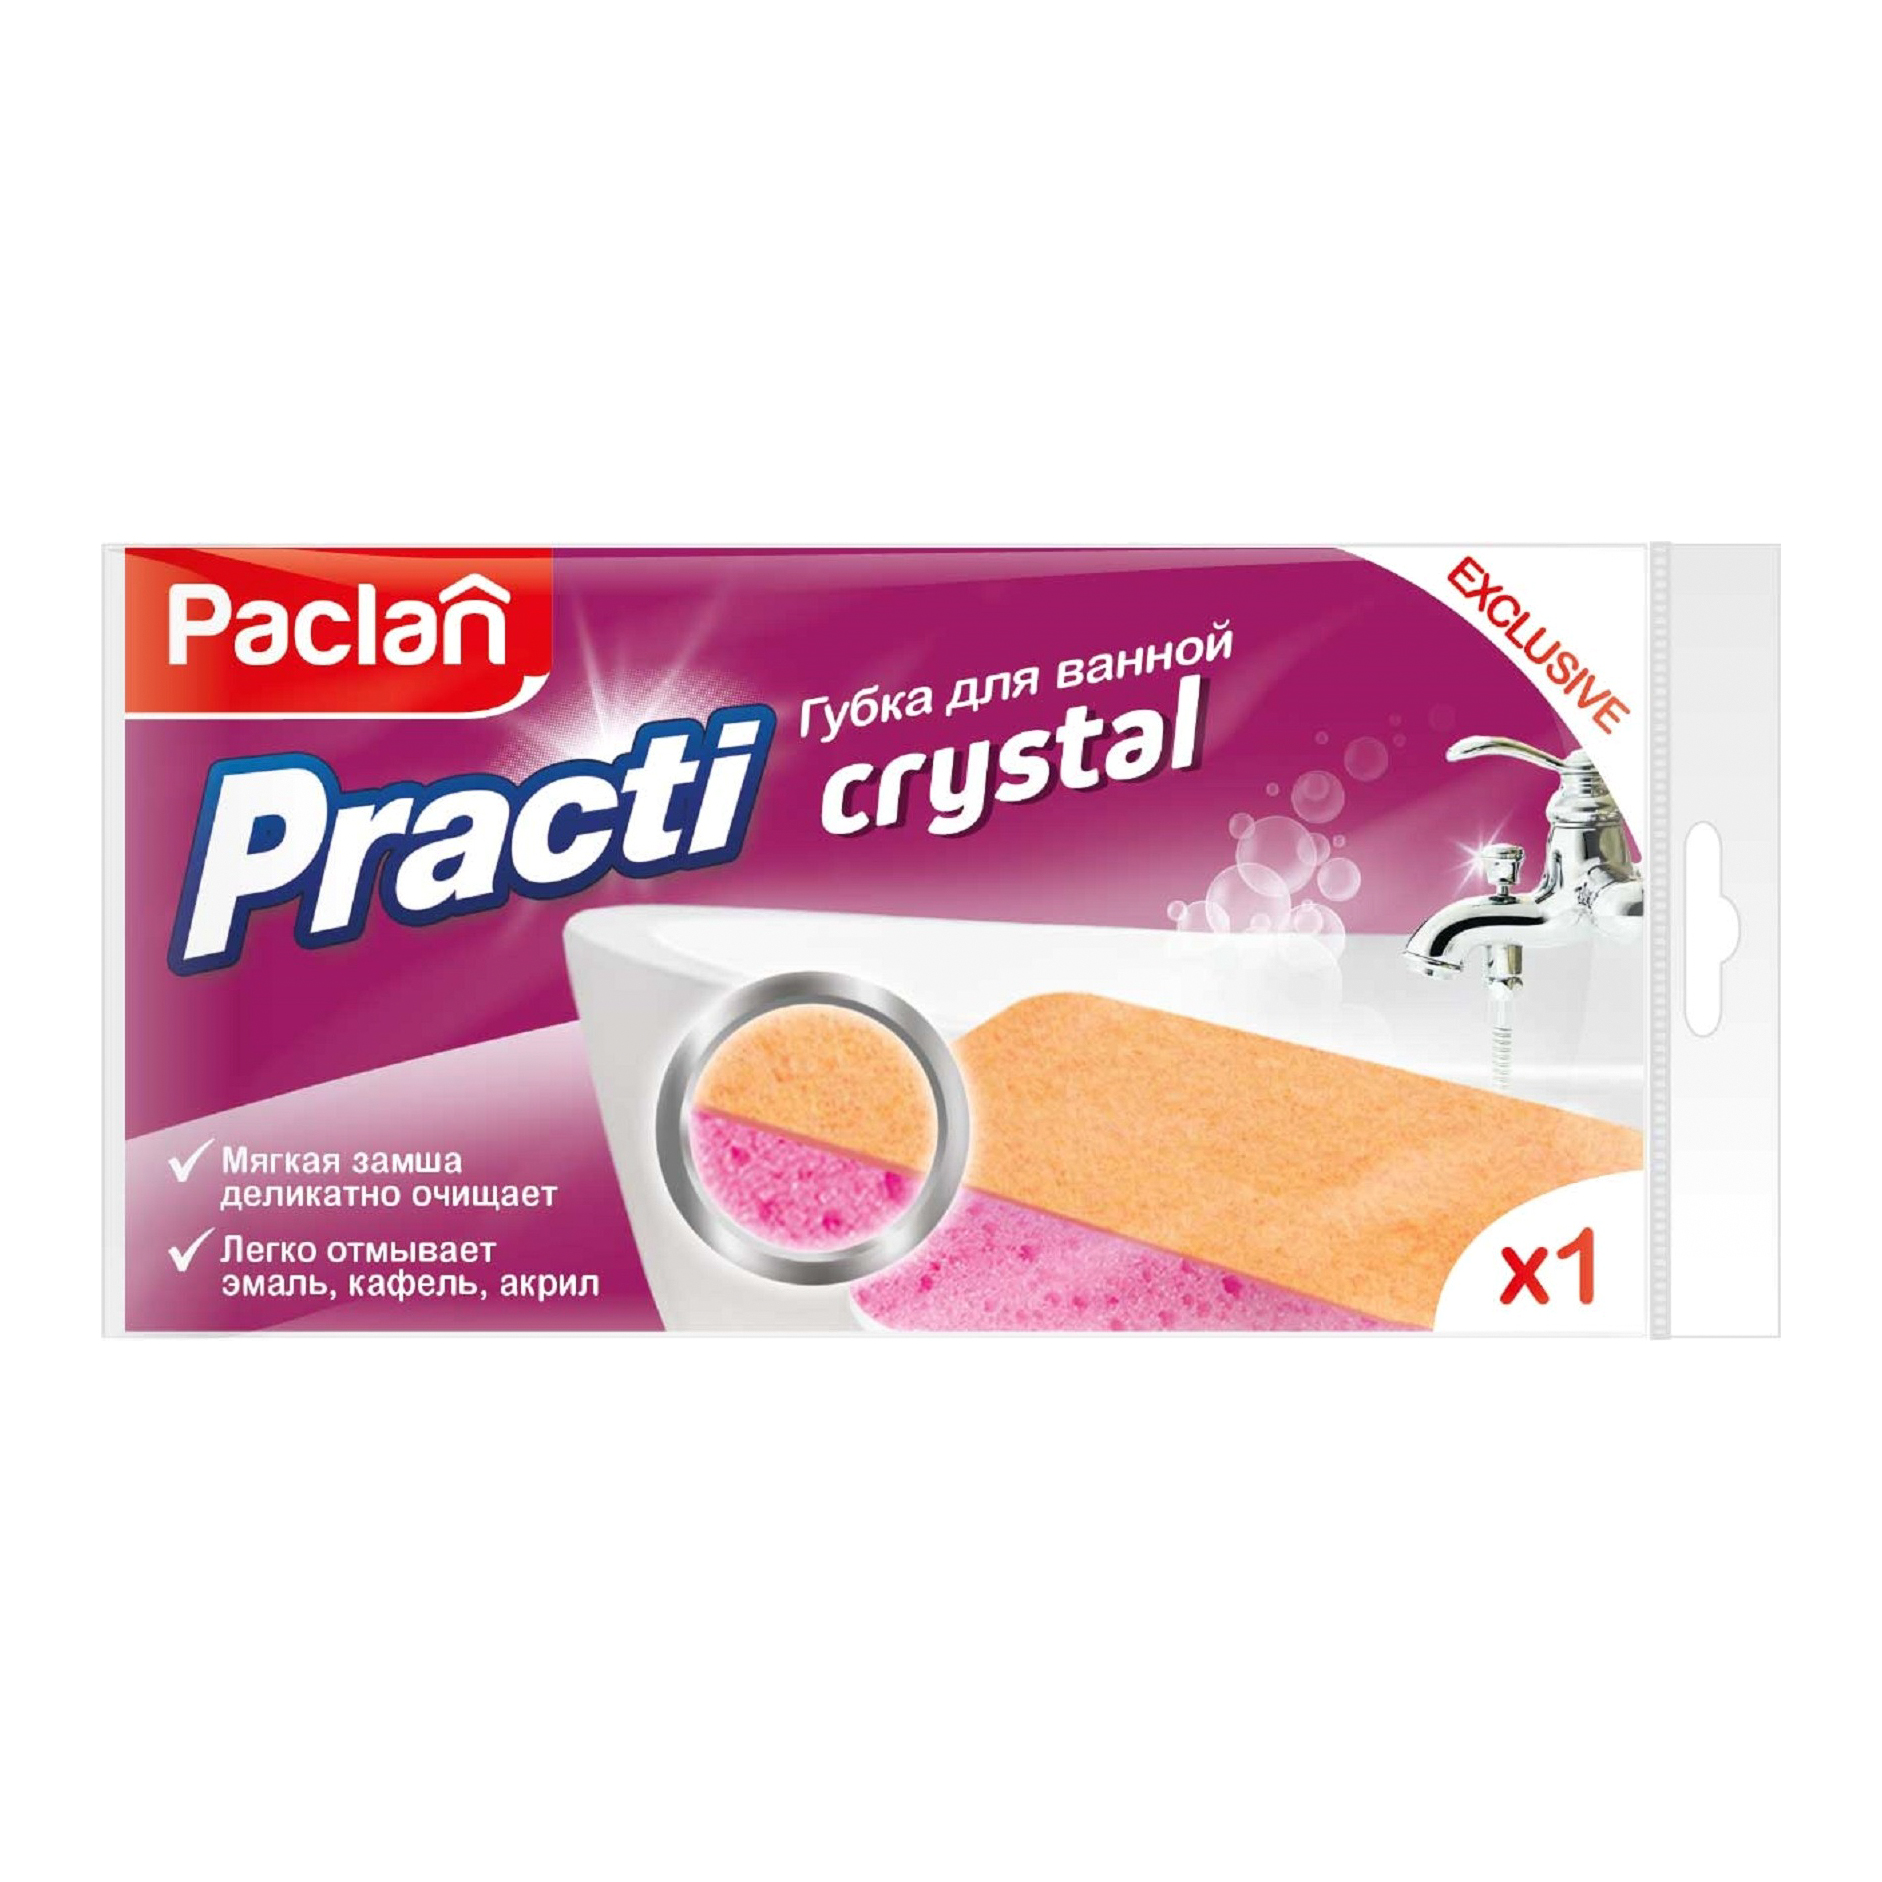 Губка для ванной Paclan Practi Crystal губка для ванной paclan